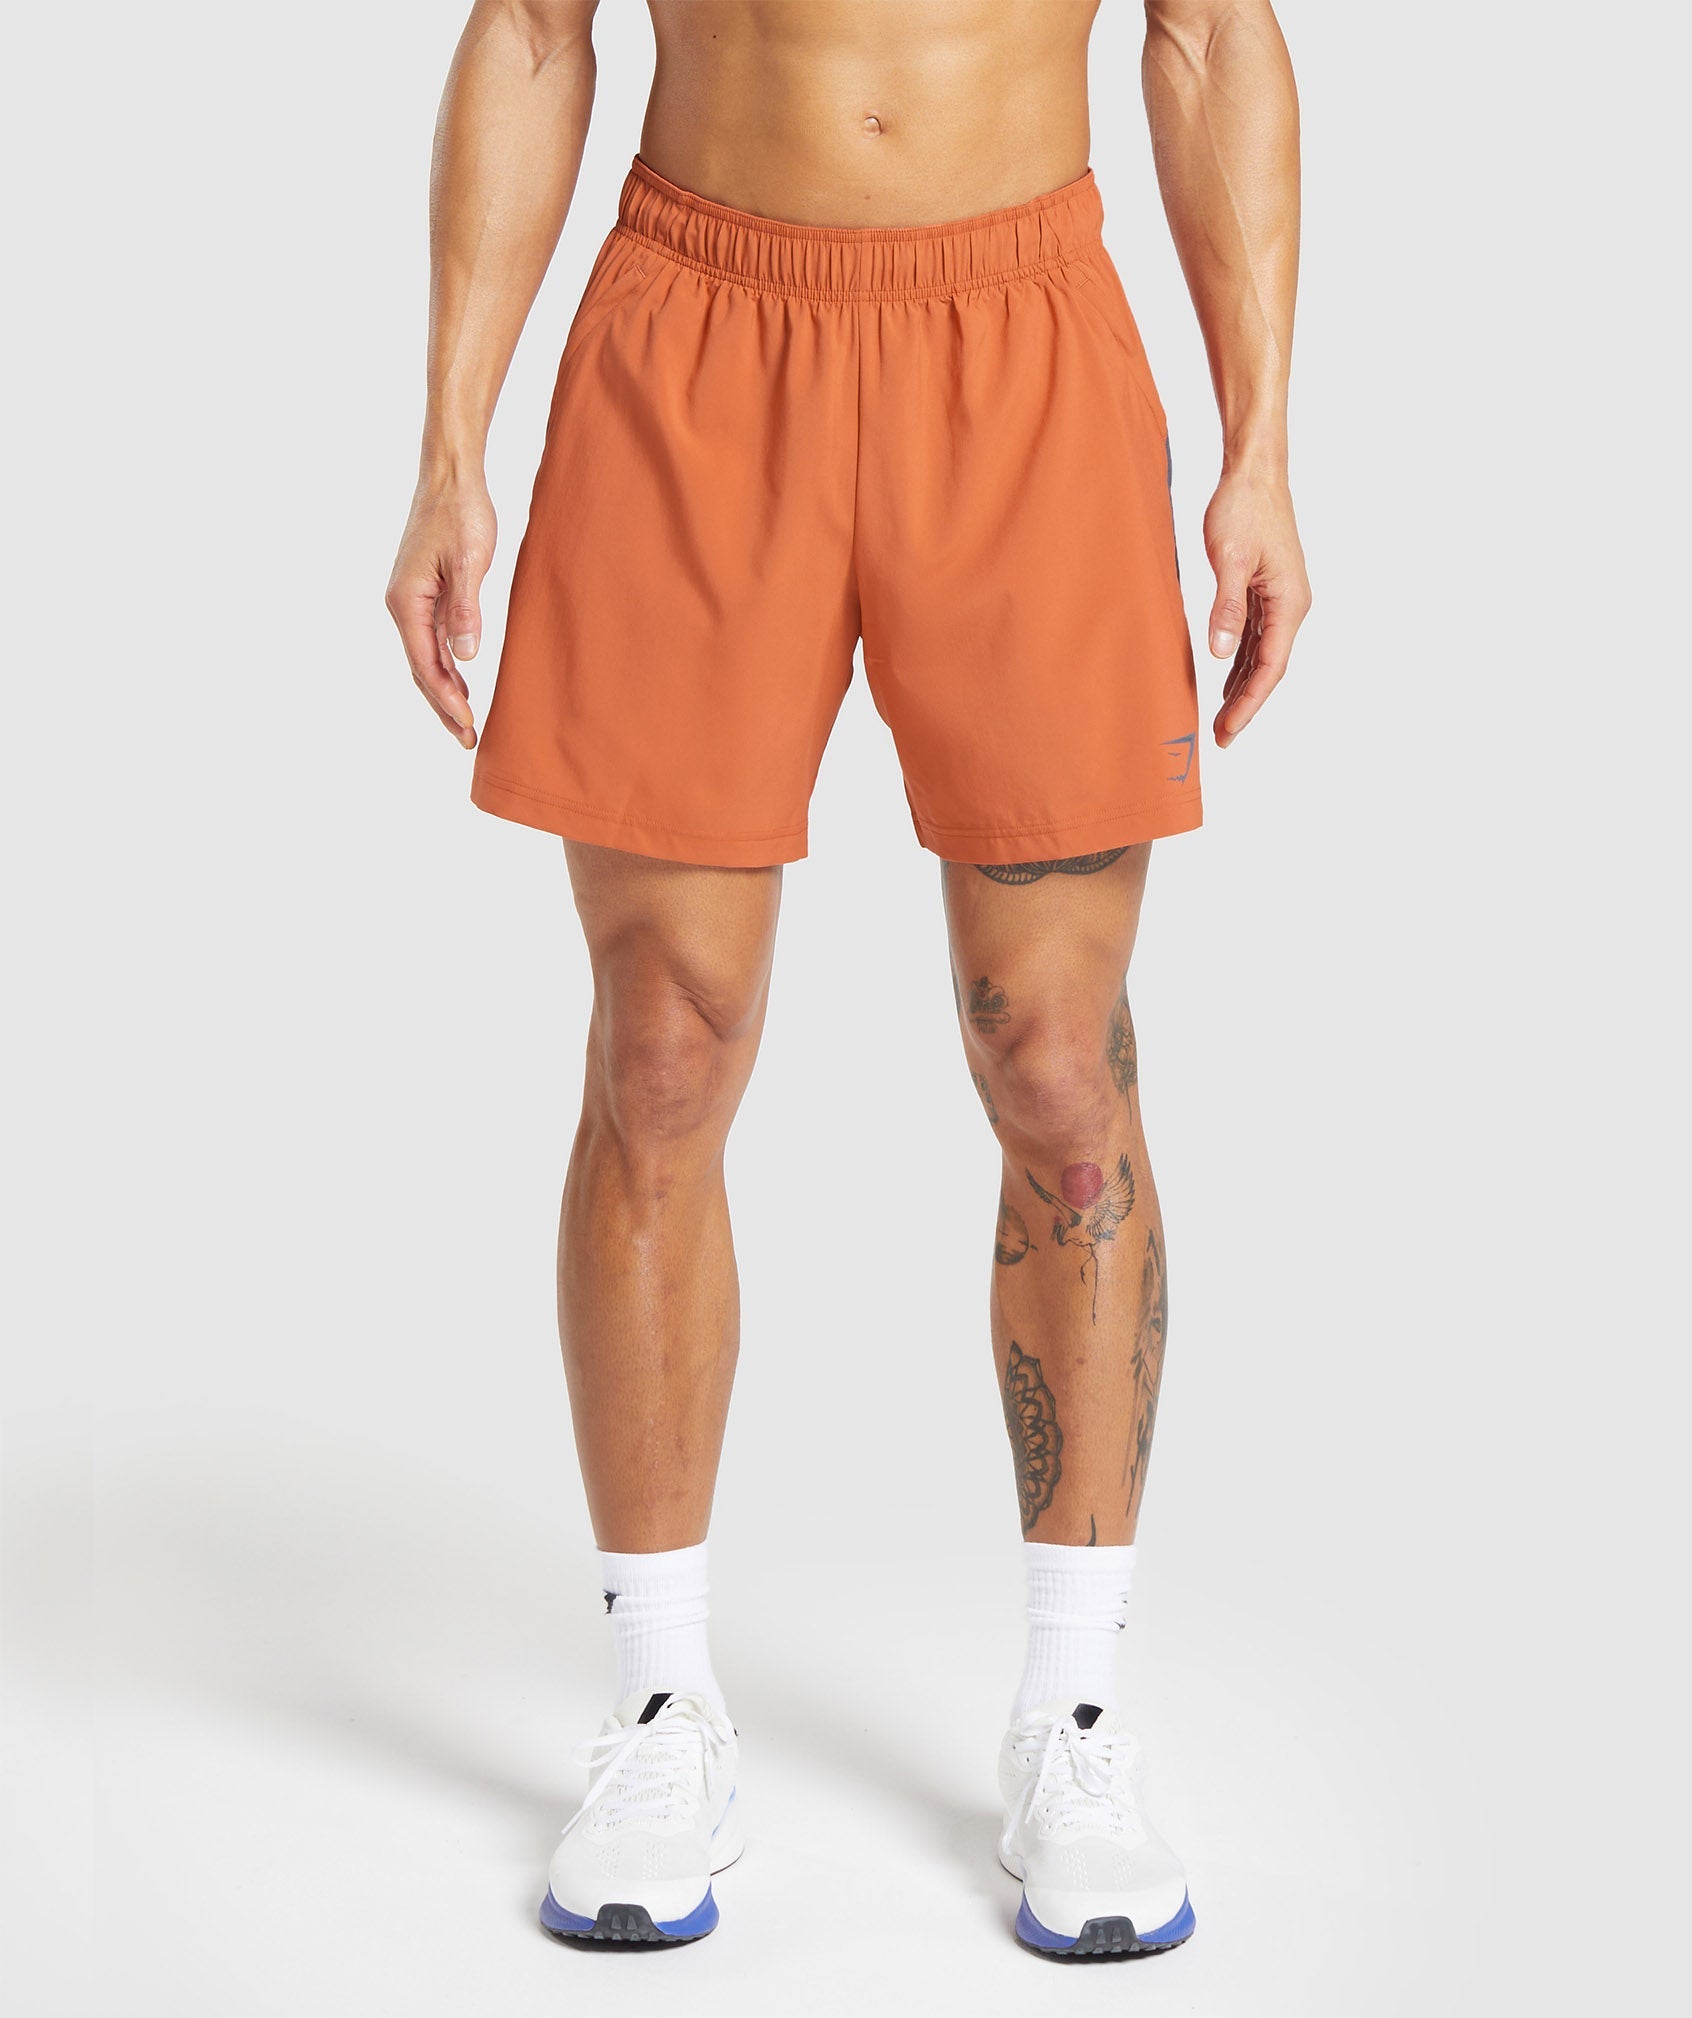 Sport 7" Shorts in Muted Orange/Titanium Blue - view 5